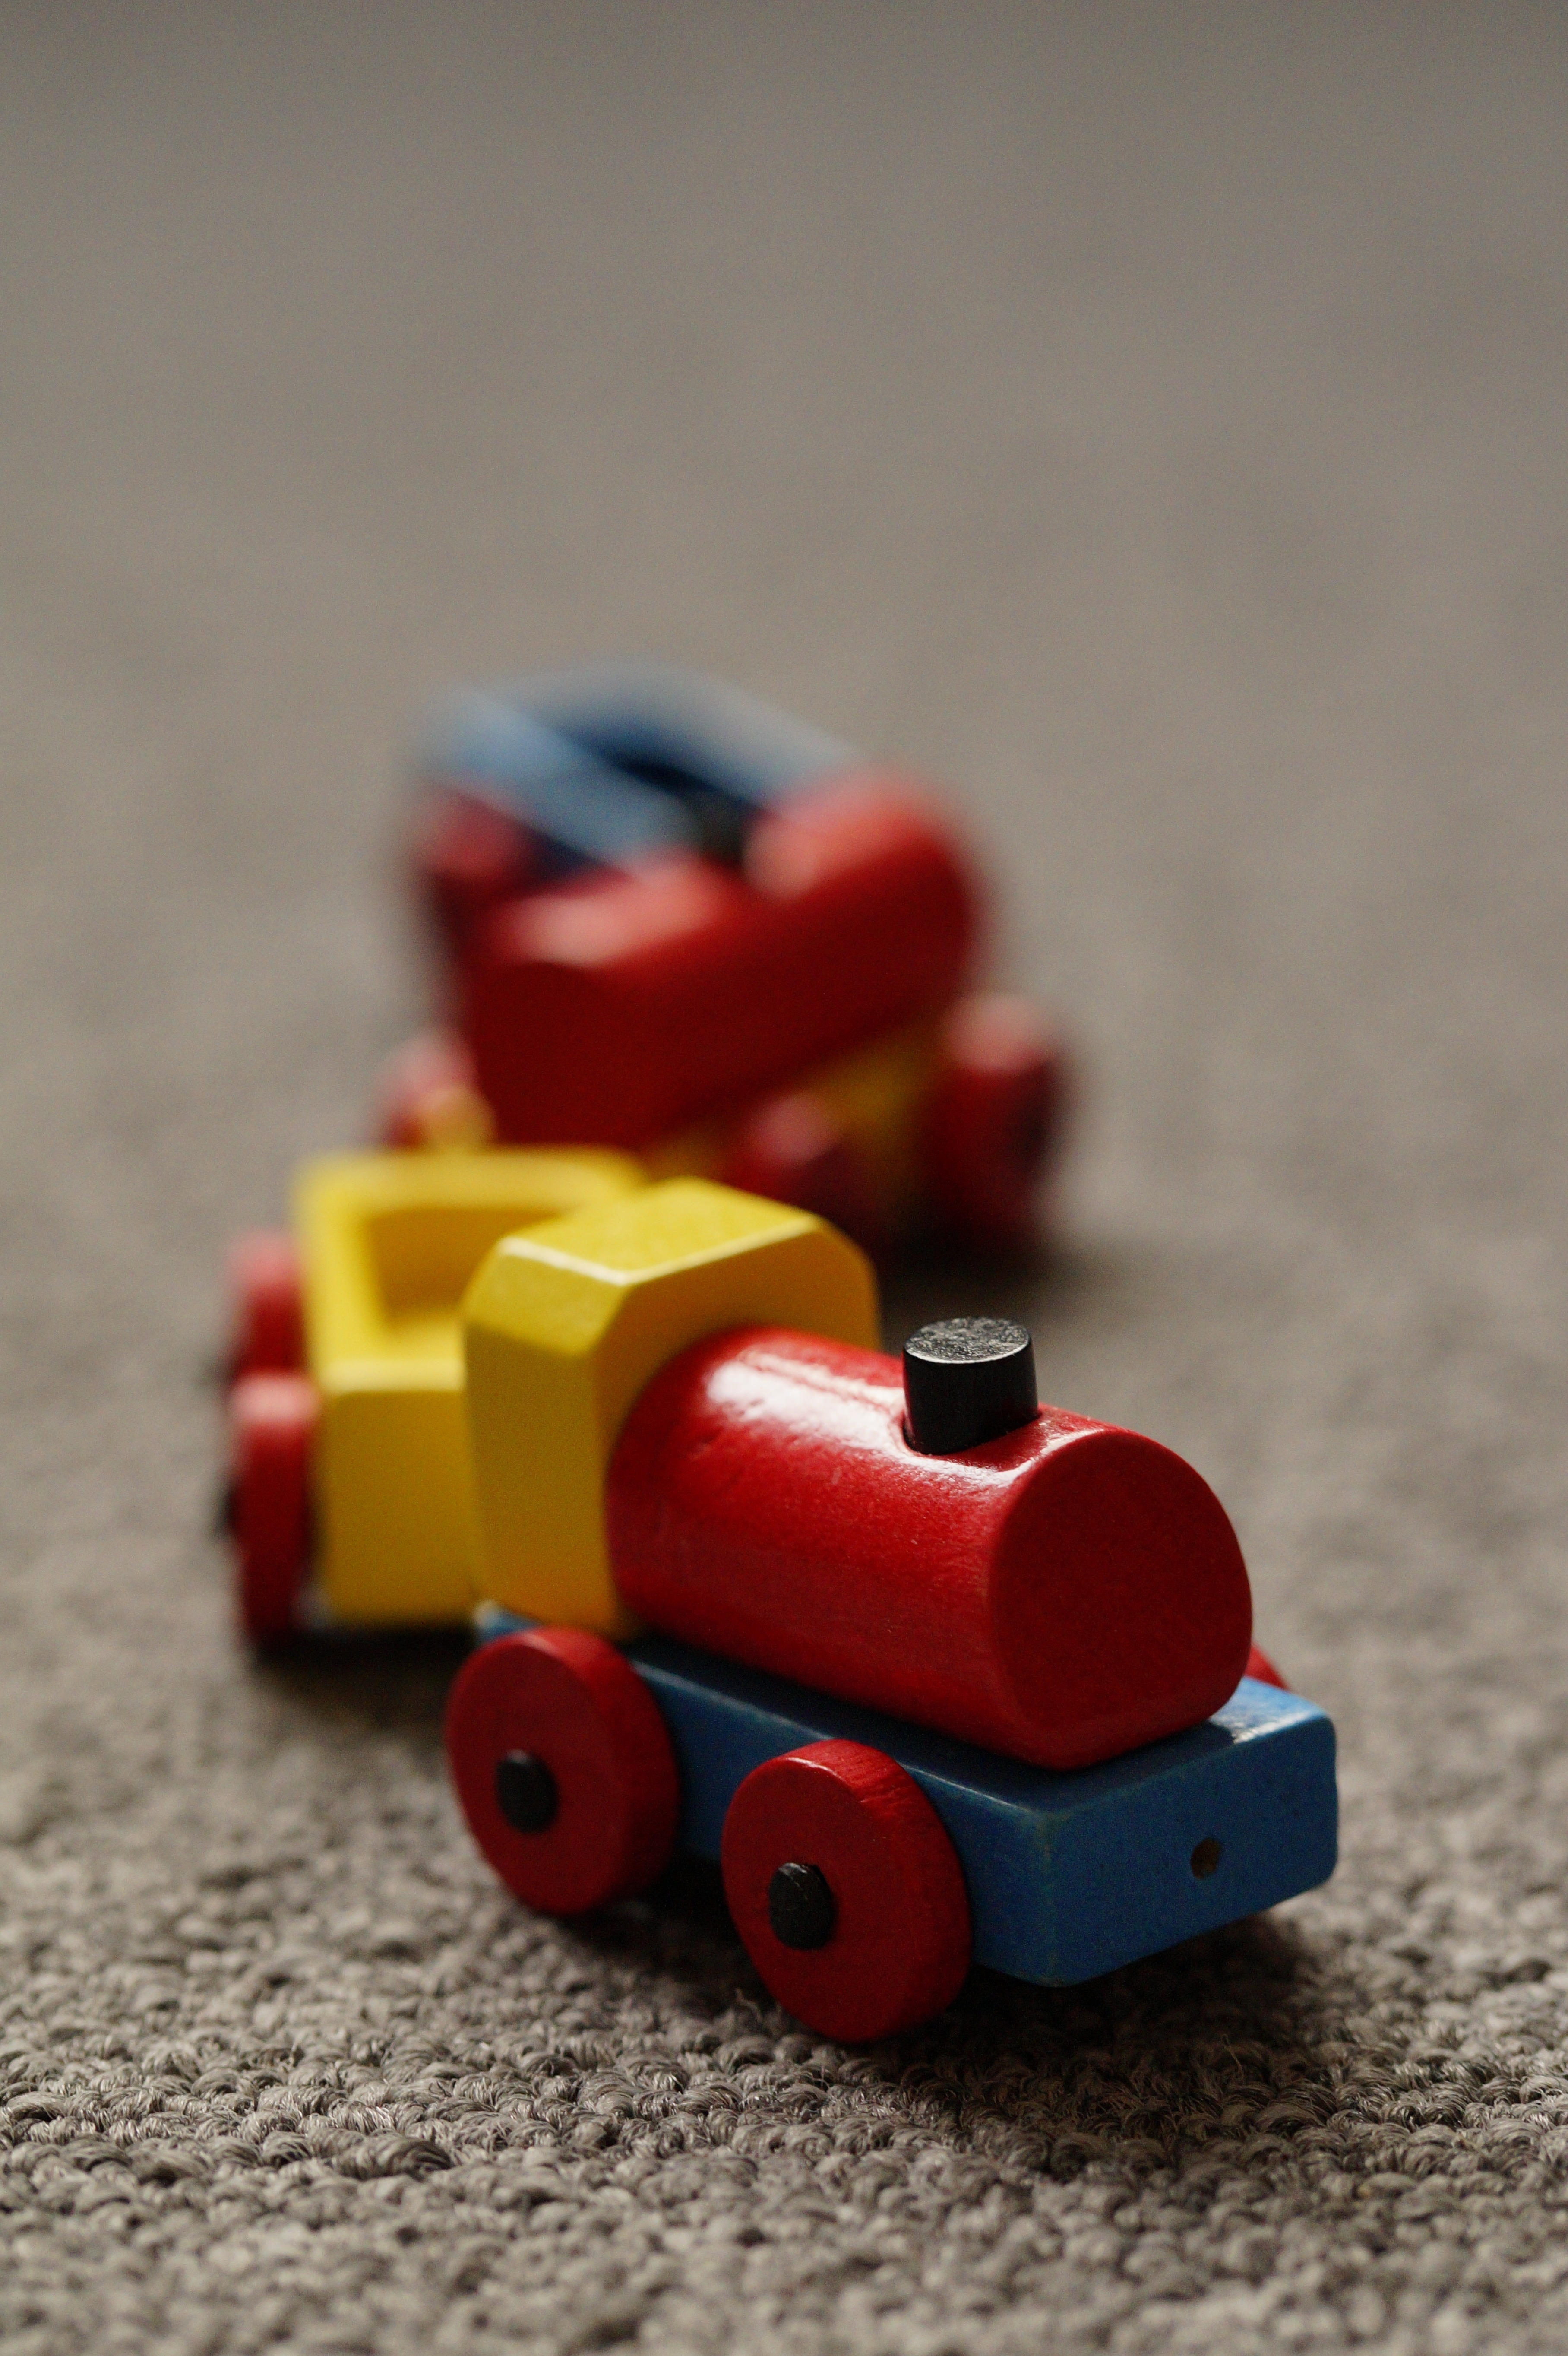 railway-play-train-red-child-colorful-toy-children-locomotive-toys-children%27s-room-wooden-railway-1110387.jpg